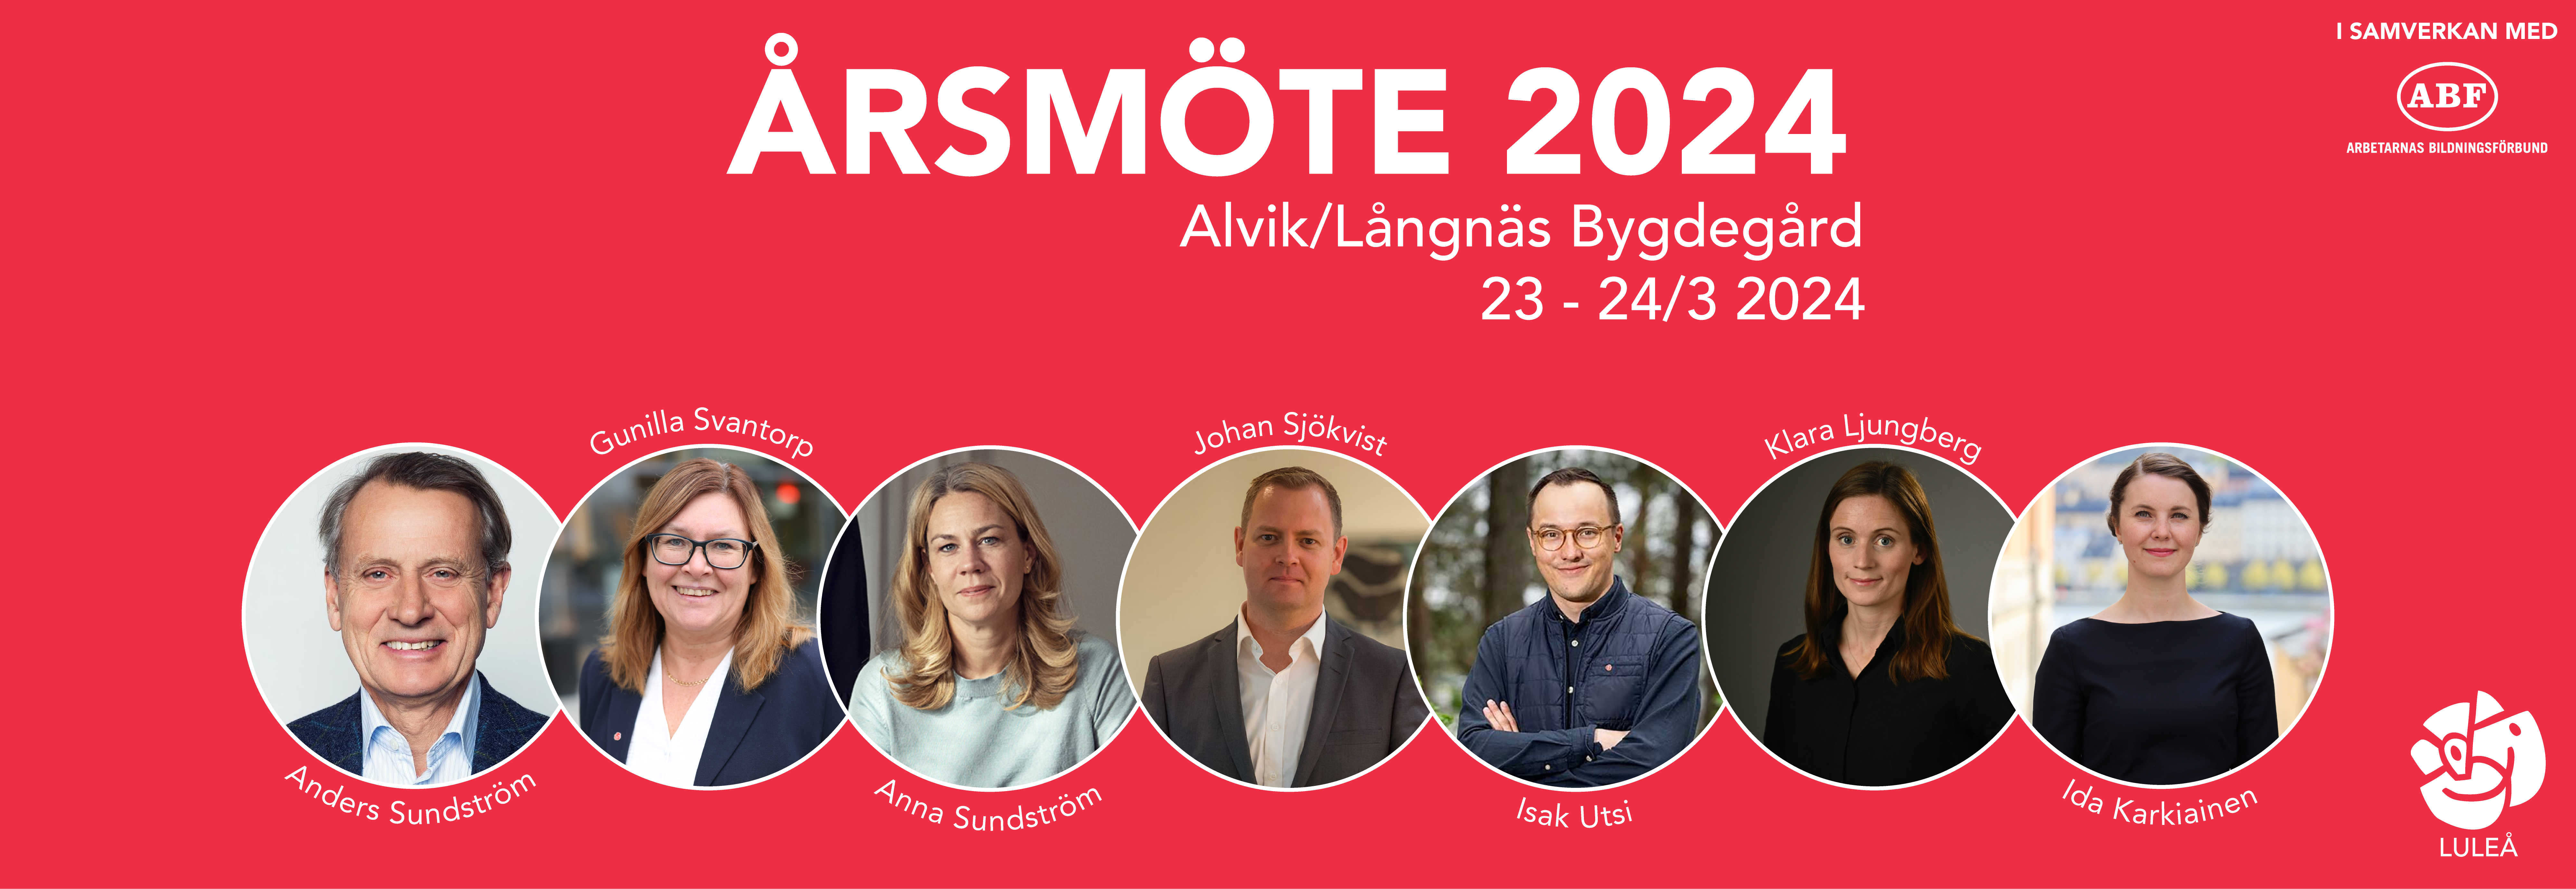 Årsmöte 2024 Socialdemokraterna Luleå